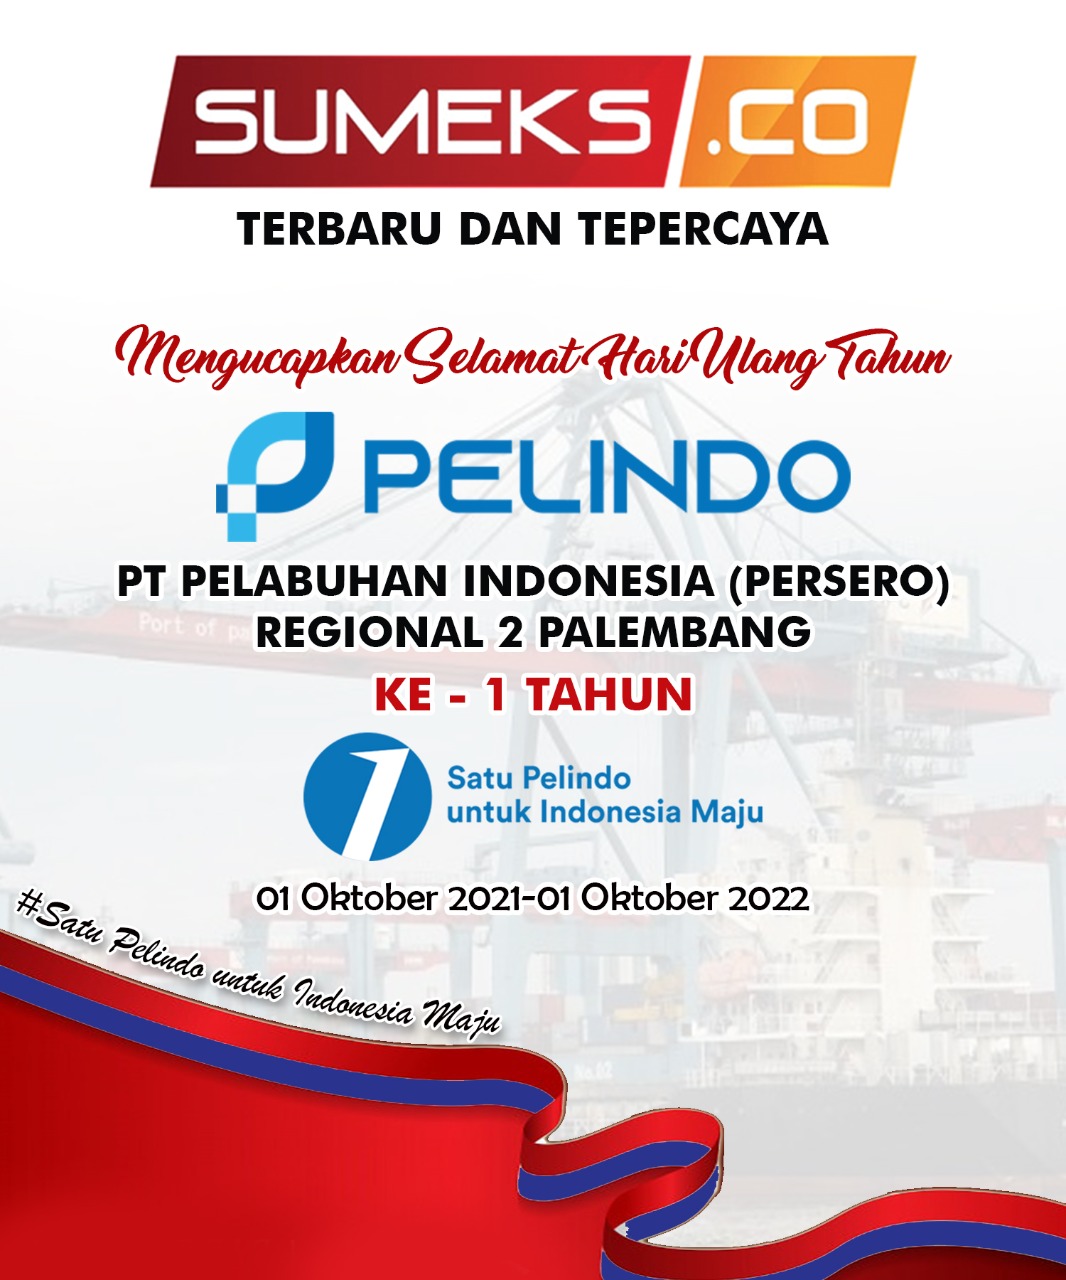 Sumeks.co Mengucapkan Hari Ulang Tahun Pelindo Reg 2 Palembang ke 1 Tahun